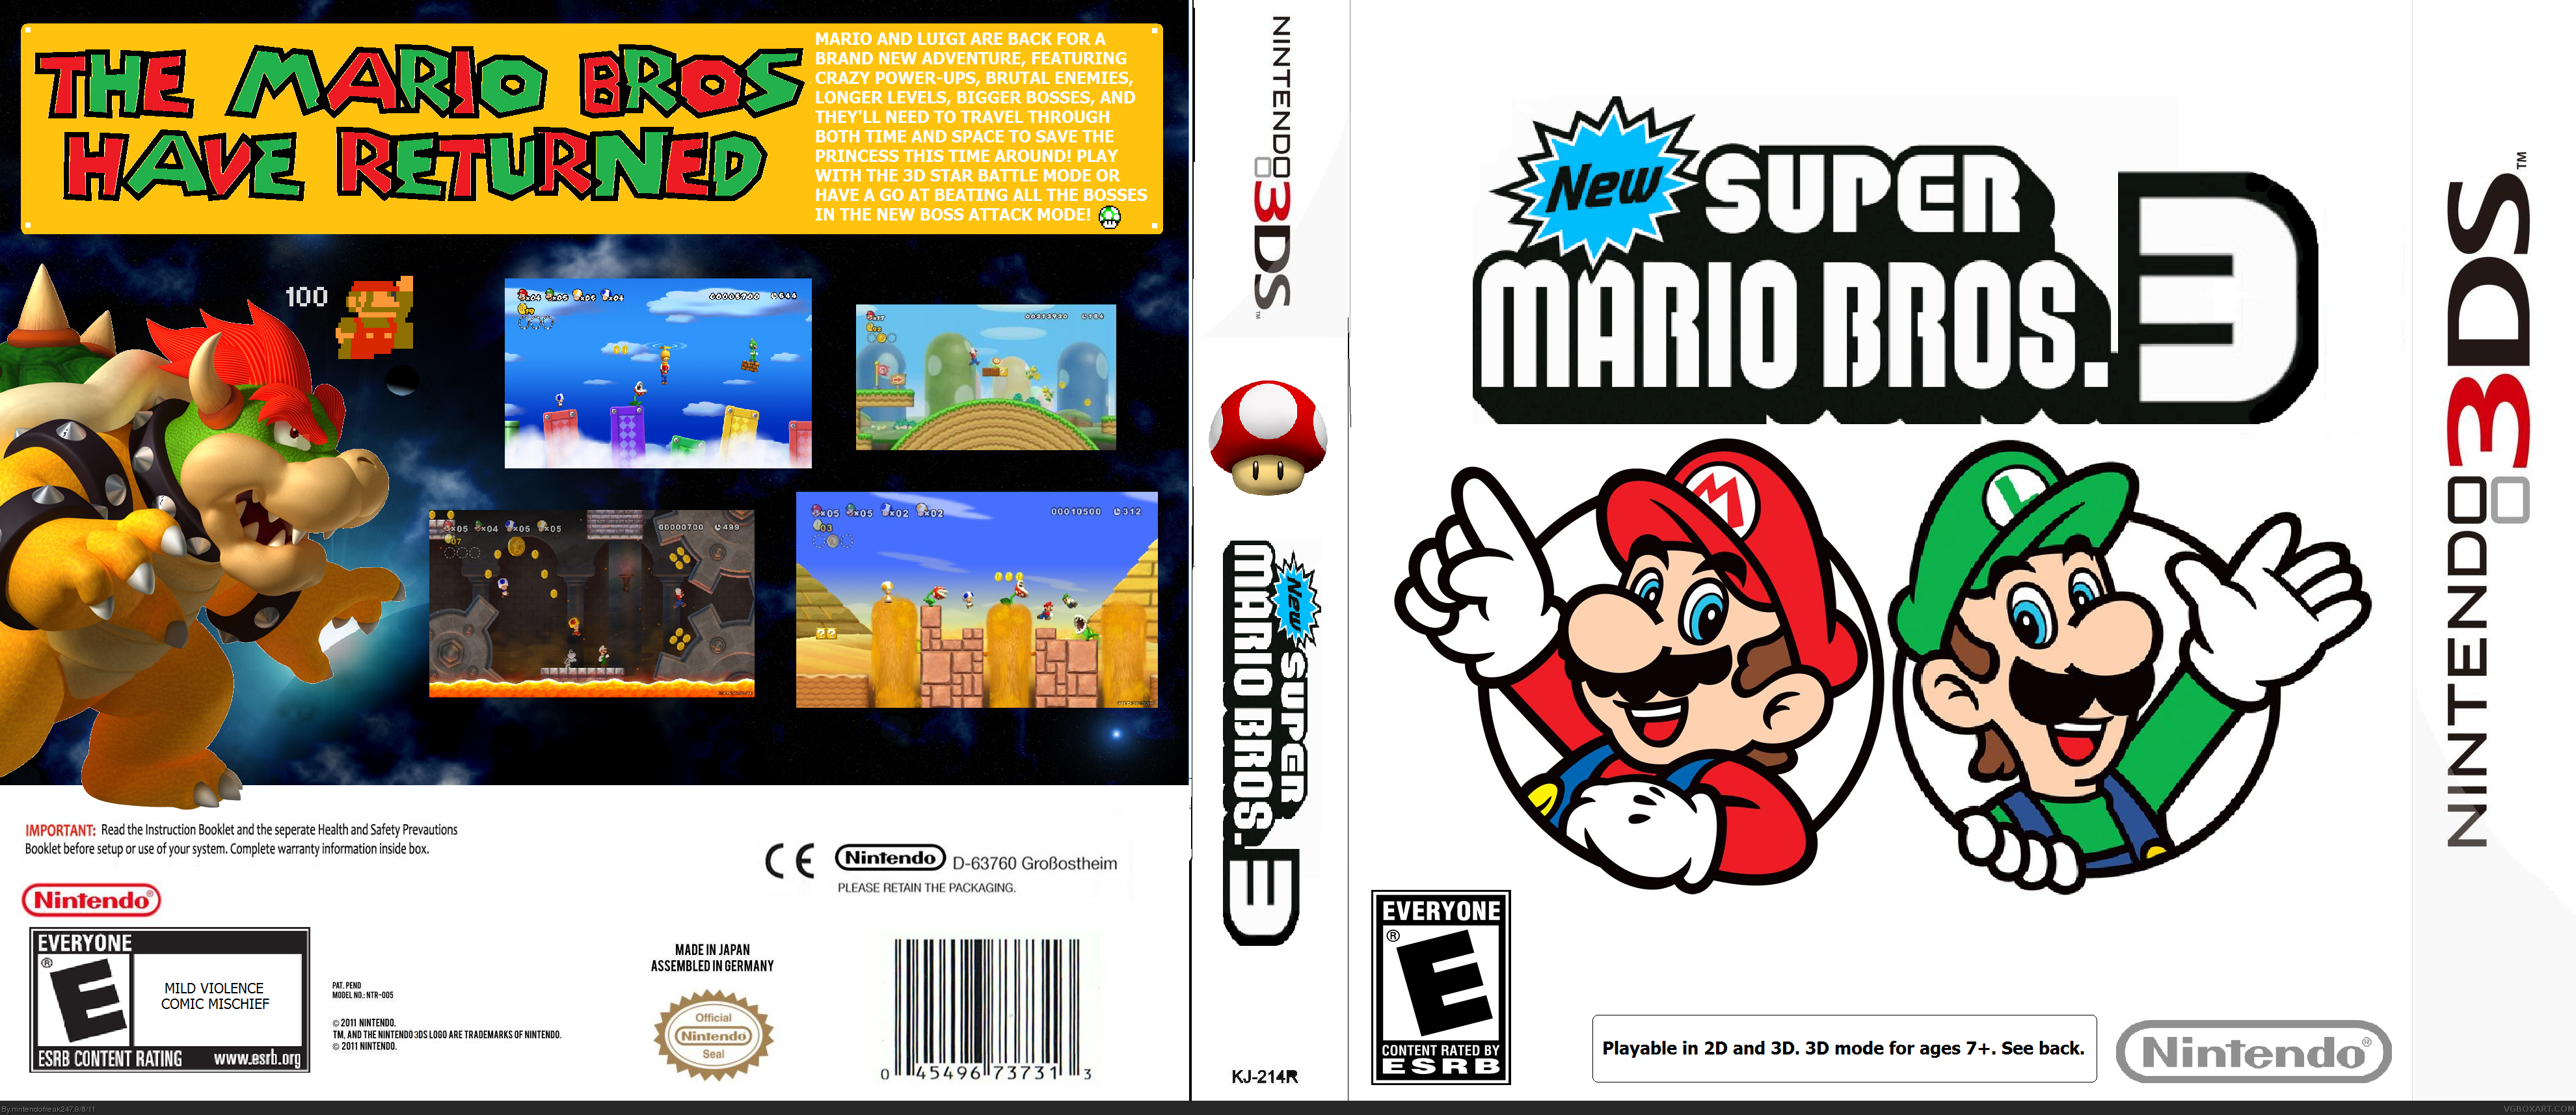 New Super Mario Bros. 3D box cover